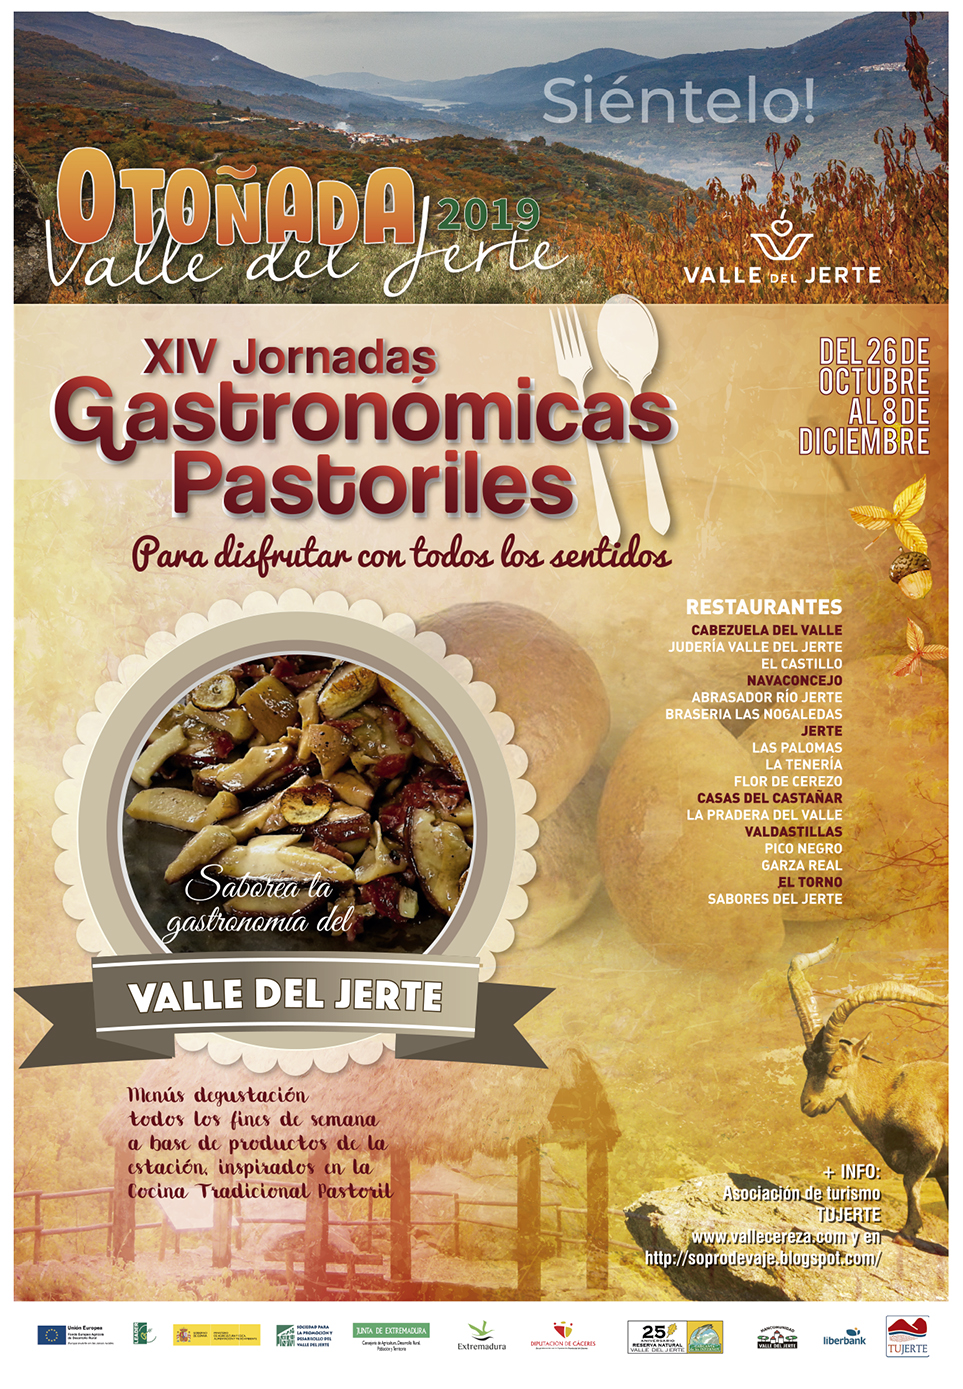 XIV Jornadas Gastronómicas Pastoriles. Otoñada 2019, Valle del Jerte